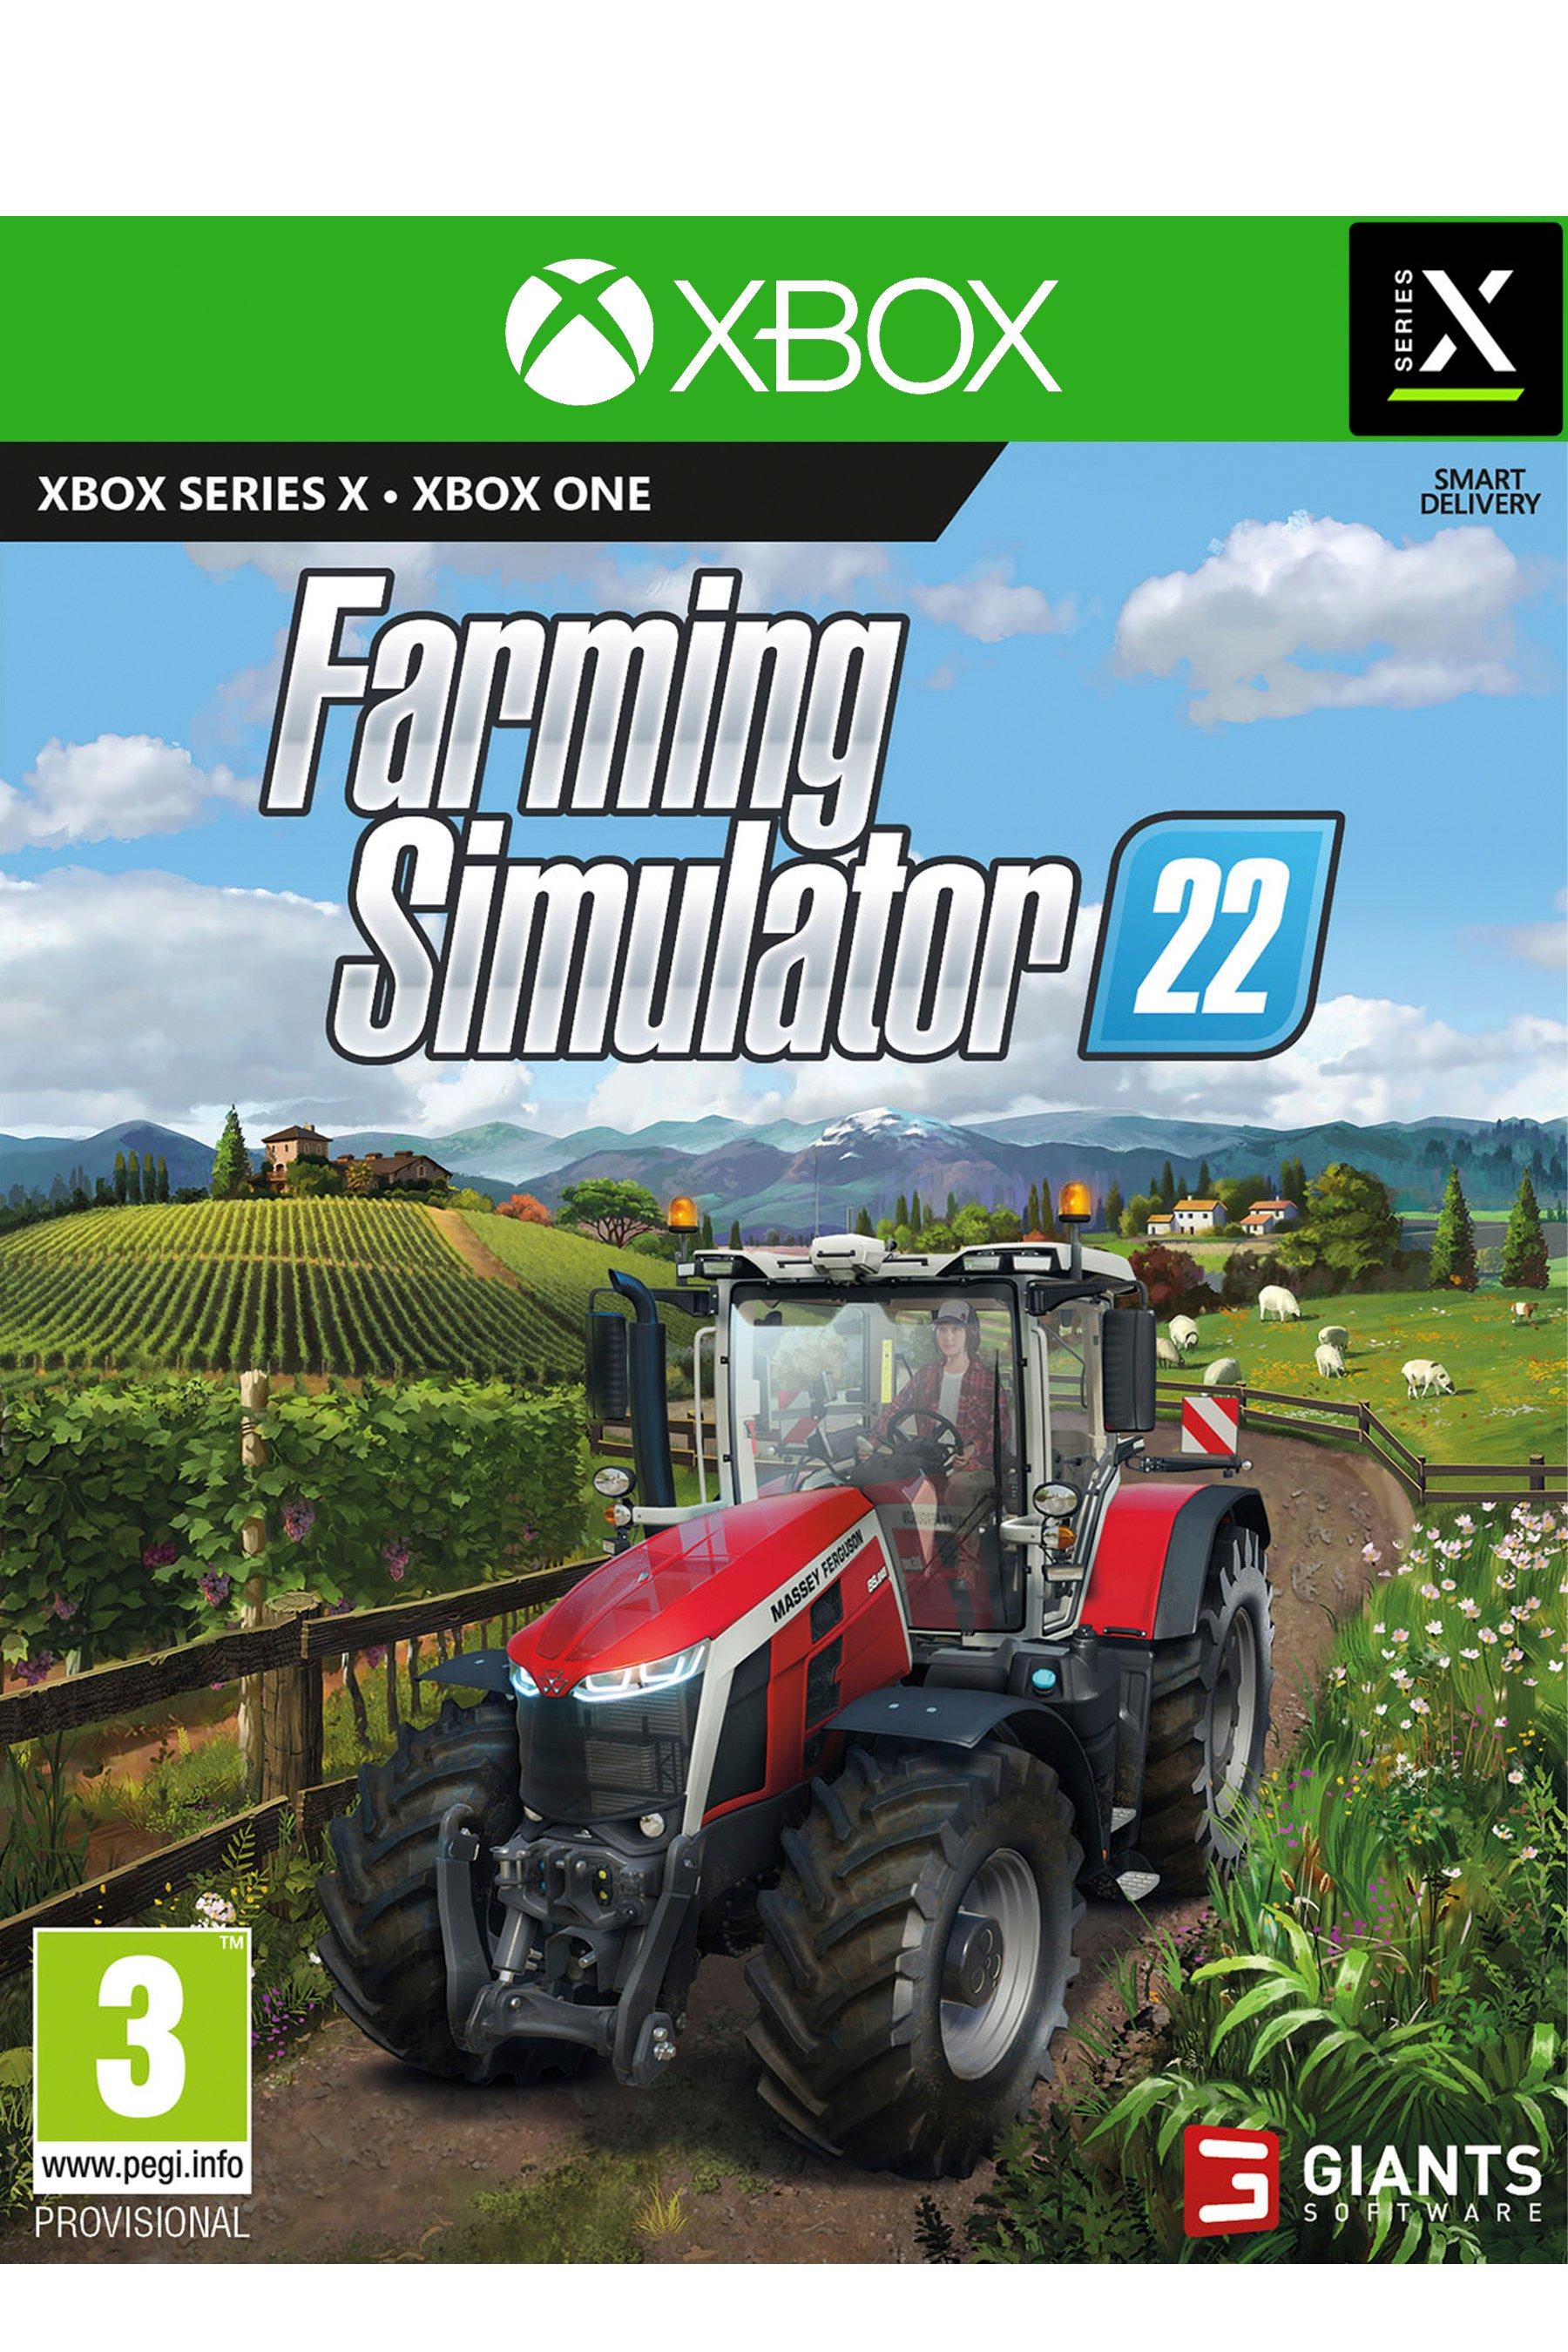 Xbox Onexbox Series X Farming Simulator 22 Microsoft Us